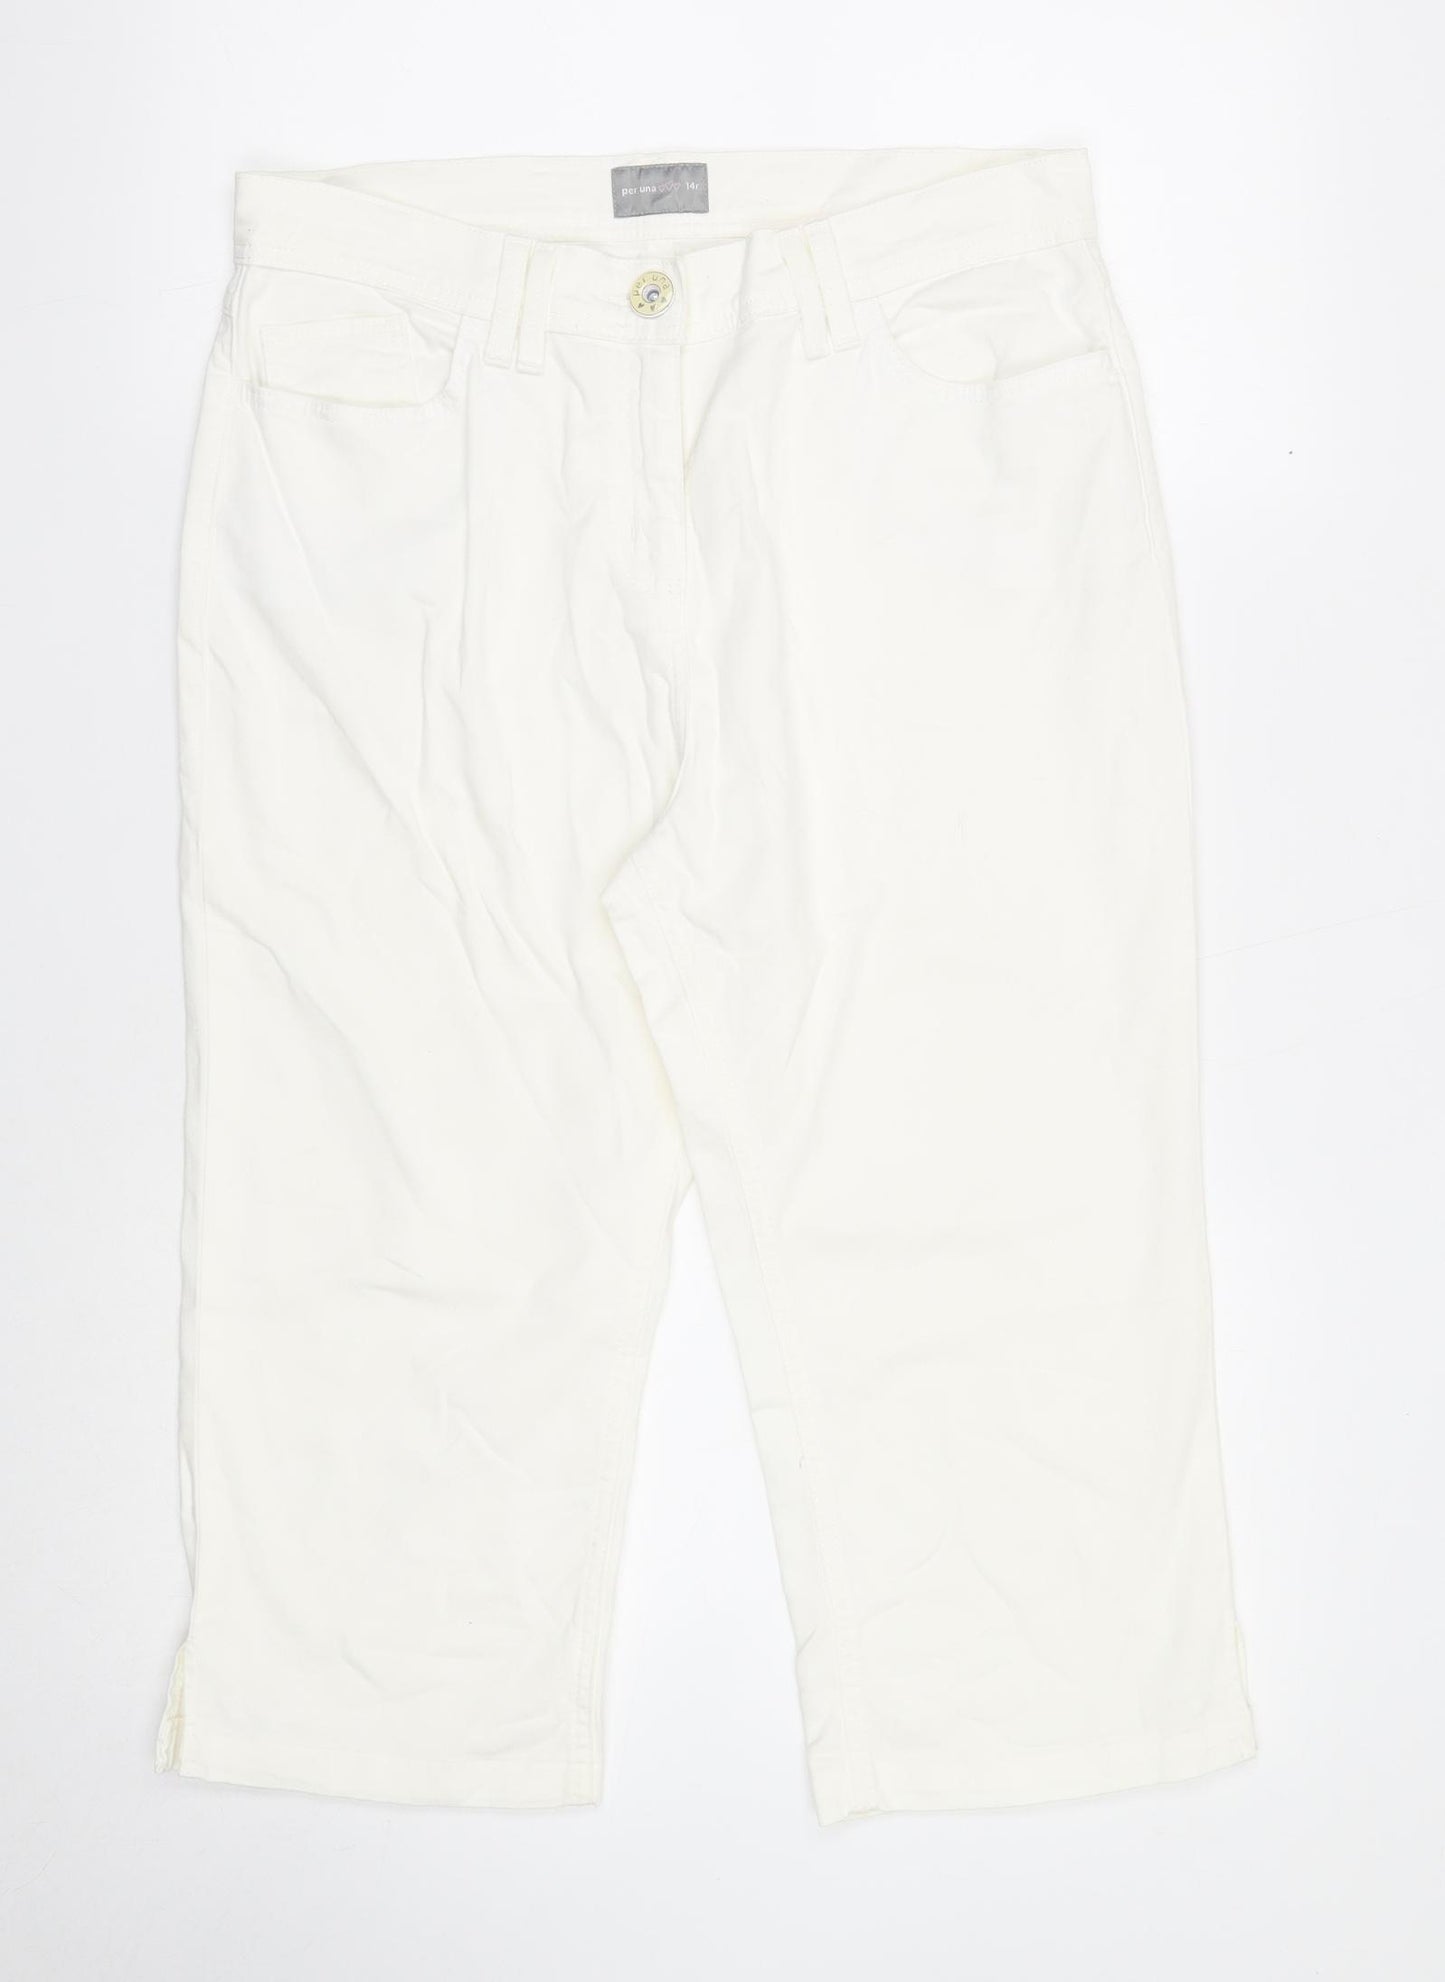 PerUna Womens White Cotton Capri Jeans Size 14 Regular Zip